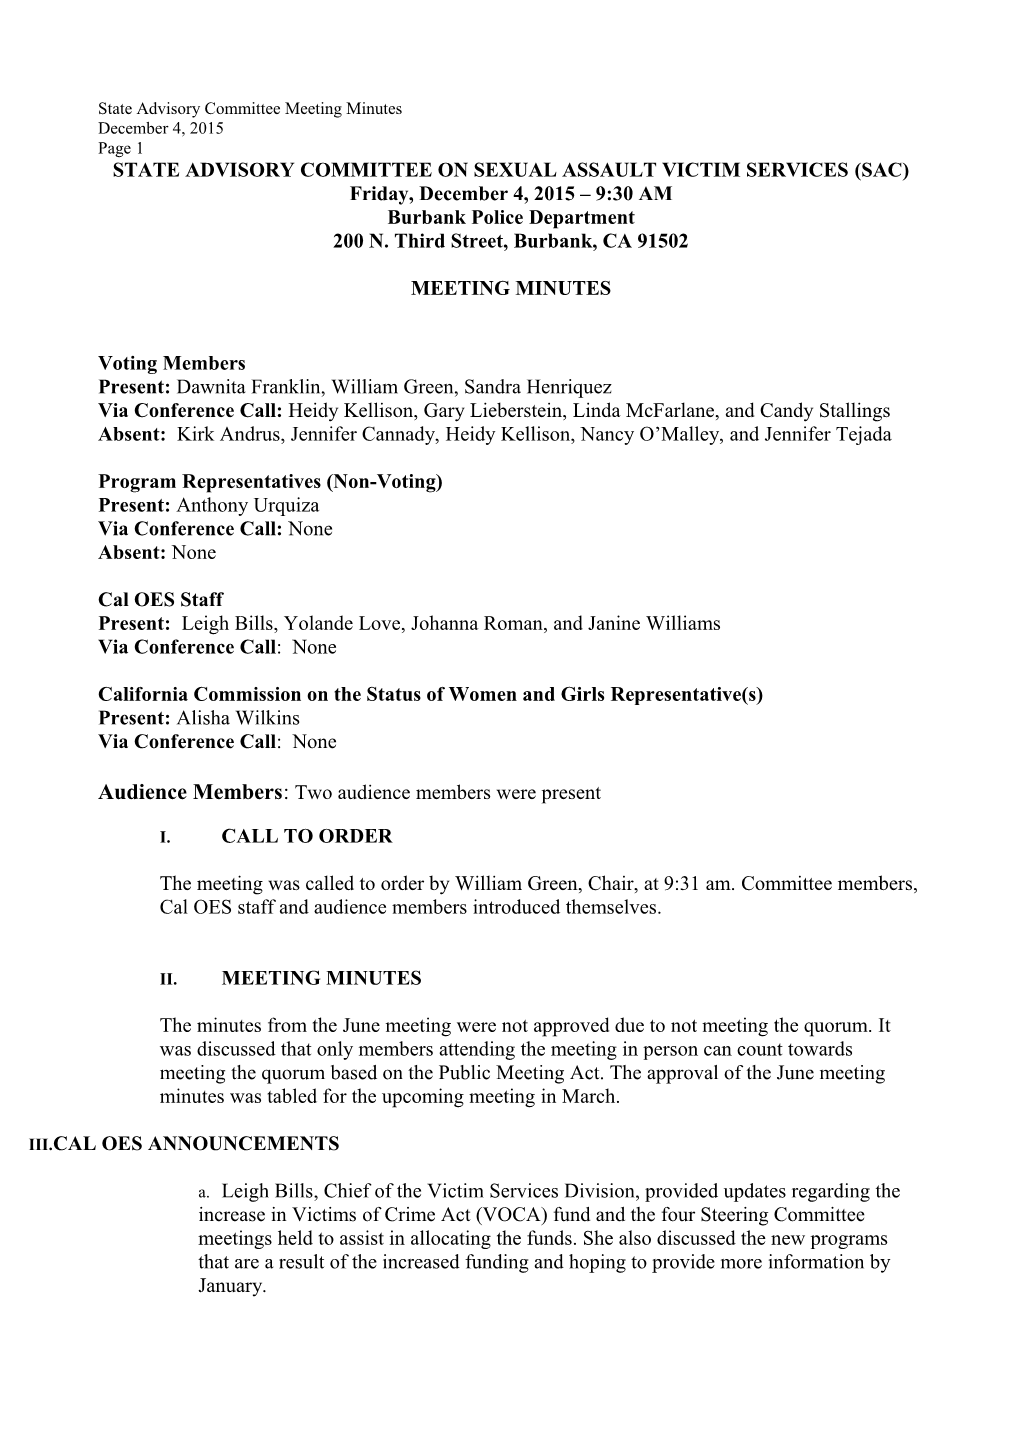 SAC Meeting Minutes - December 4, 2015